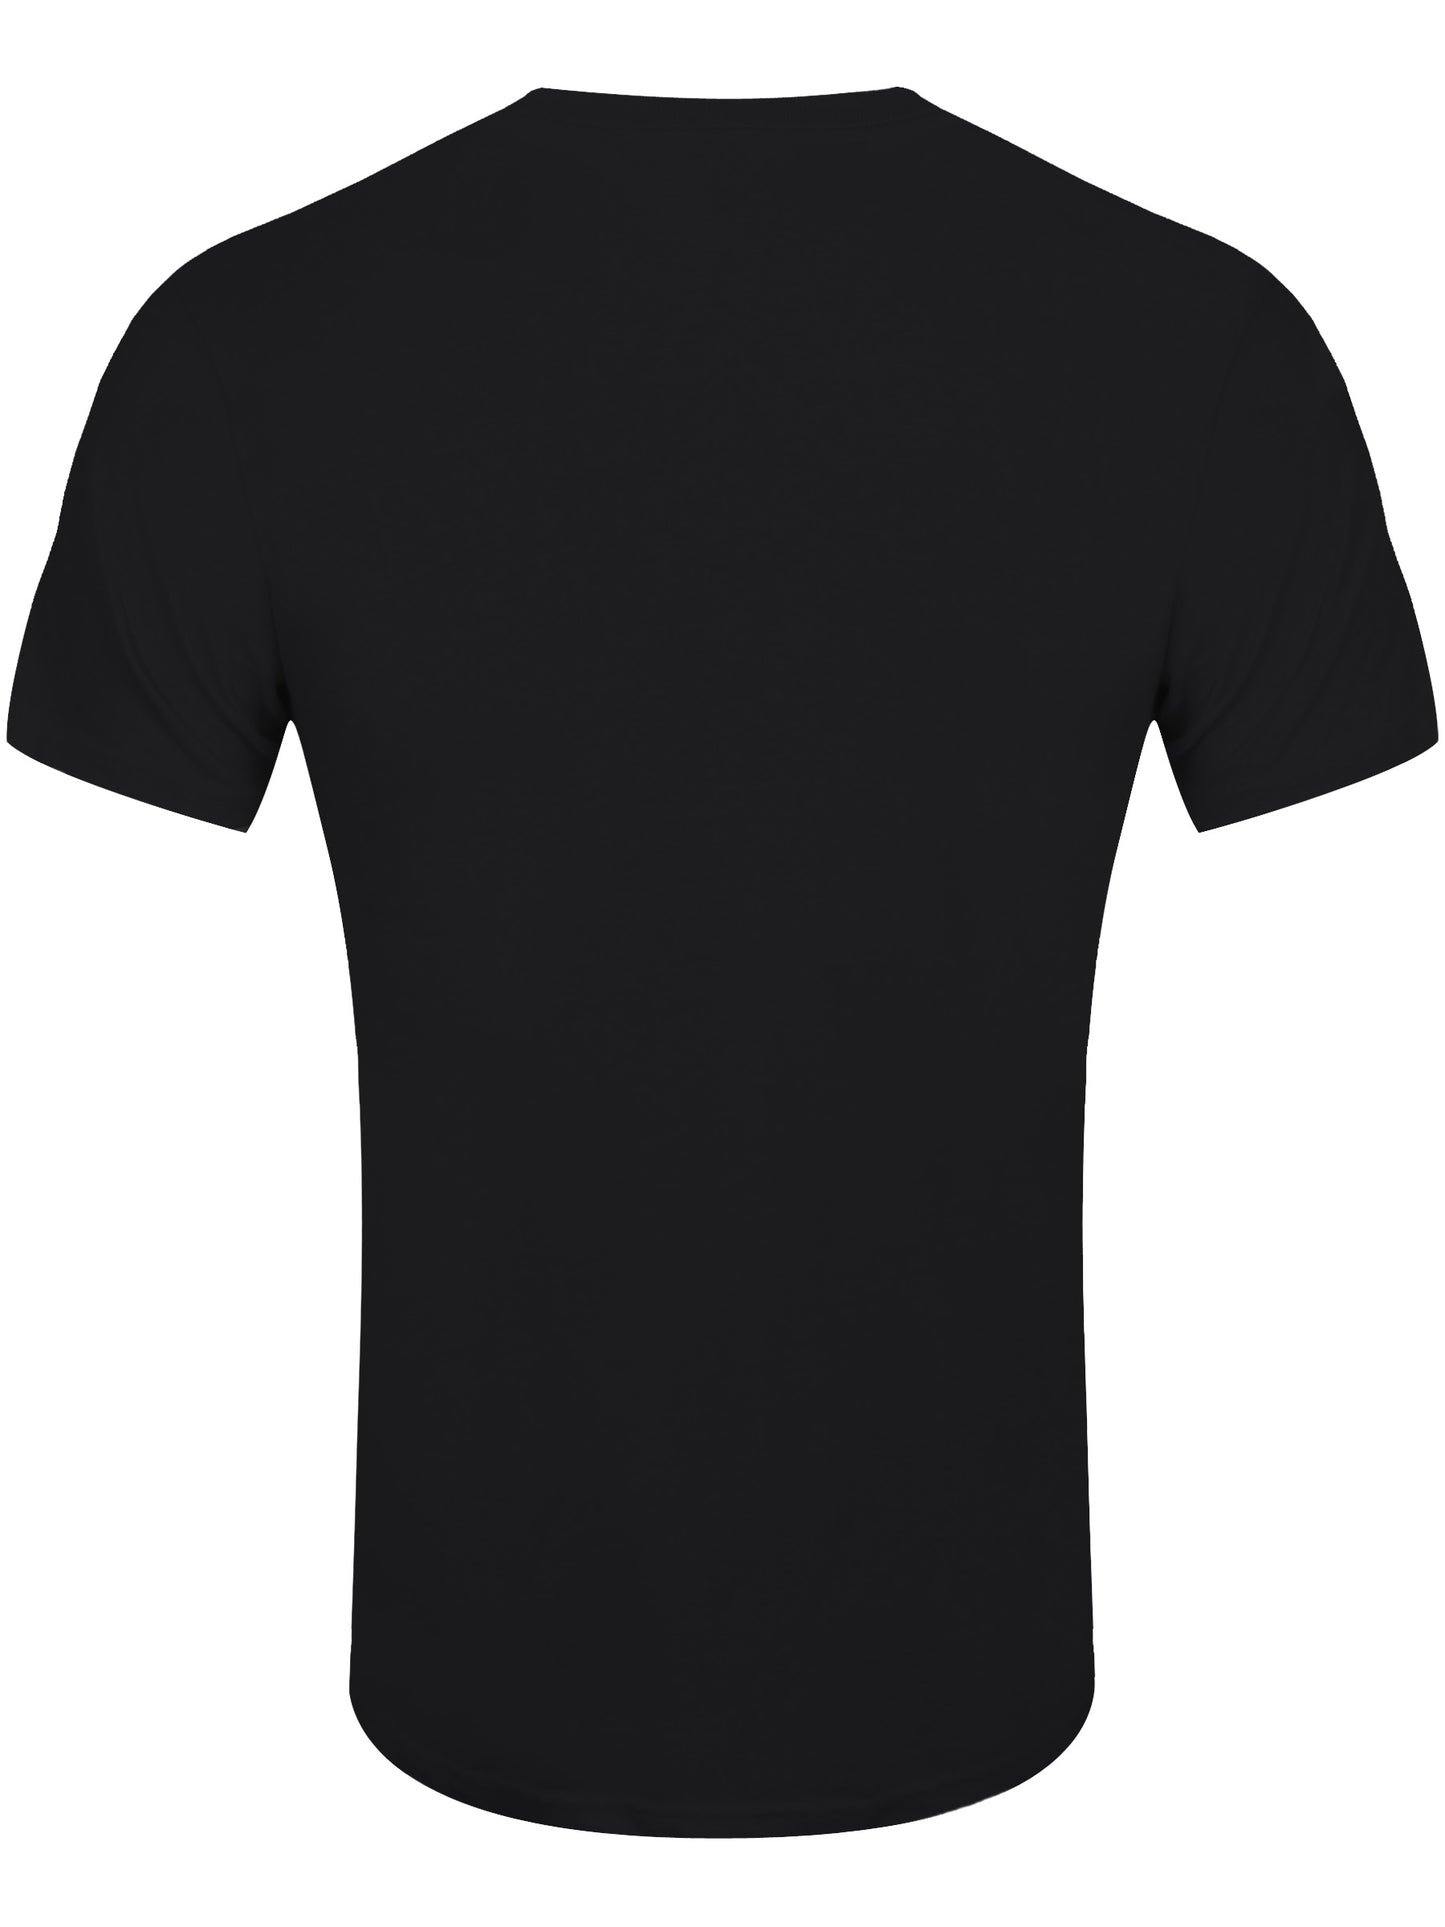 Pokemon Since 96 Men's Black T-Shirt